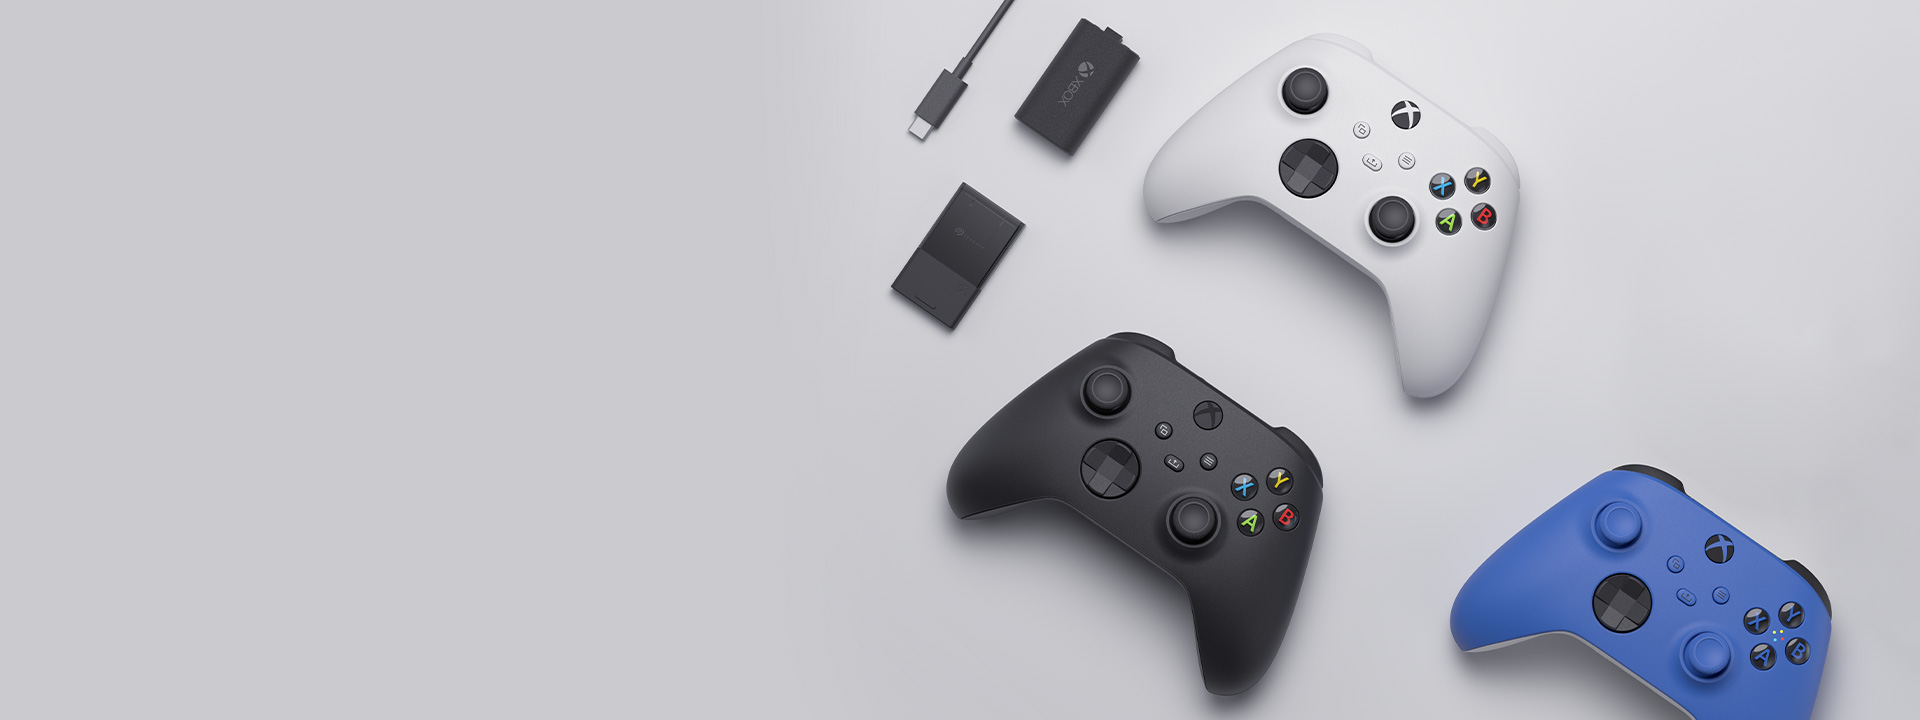 Olika x-boxtillbehör, inklusive Xbox–trådlös handkontroll, Play and Charge Kit och Seagate Storage Expansion Card för Xbox Series X|S har arrangerats intill varandra.